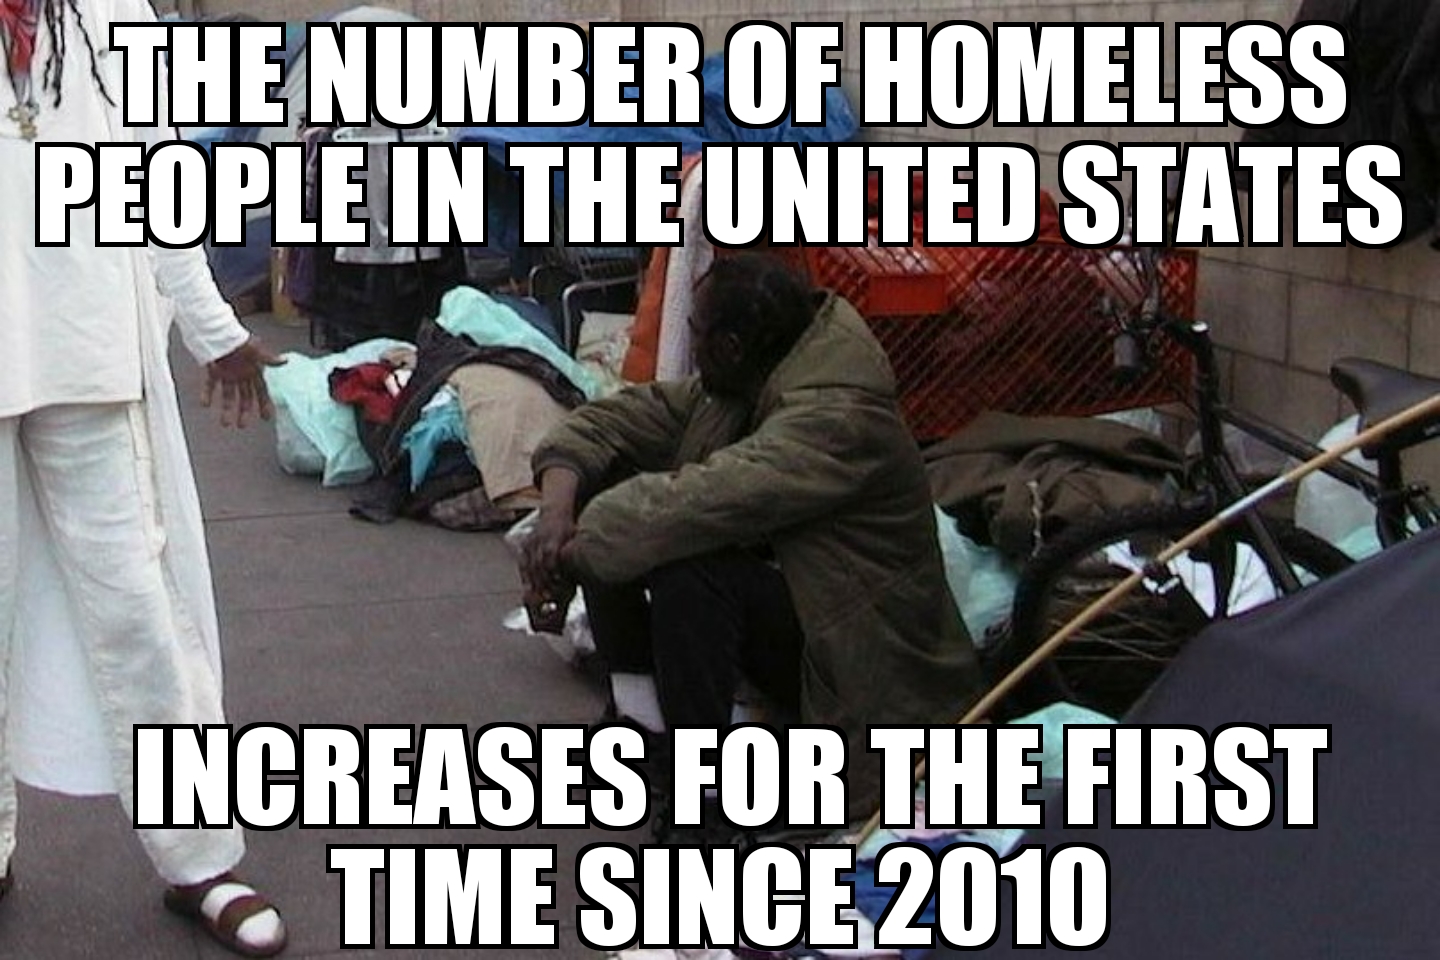 U.S. homeless population increases